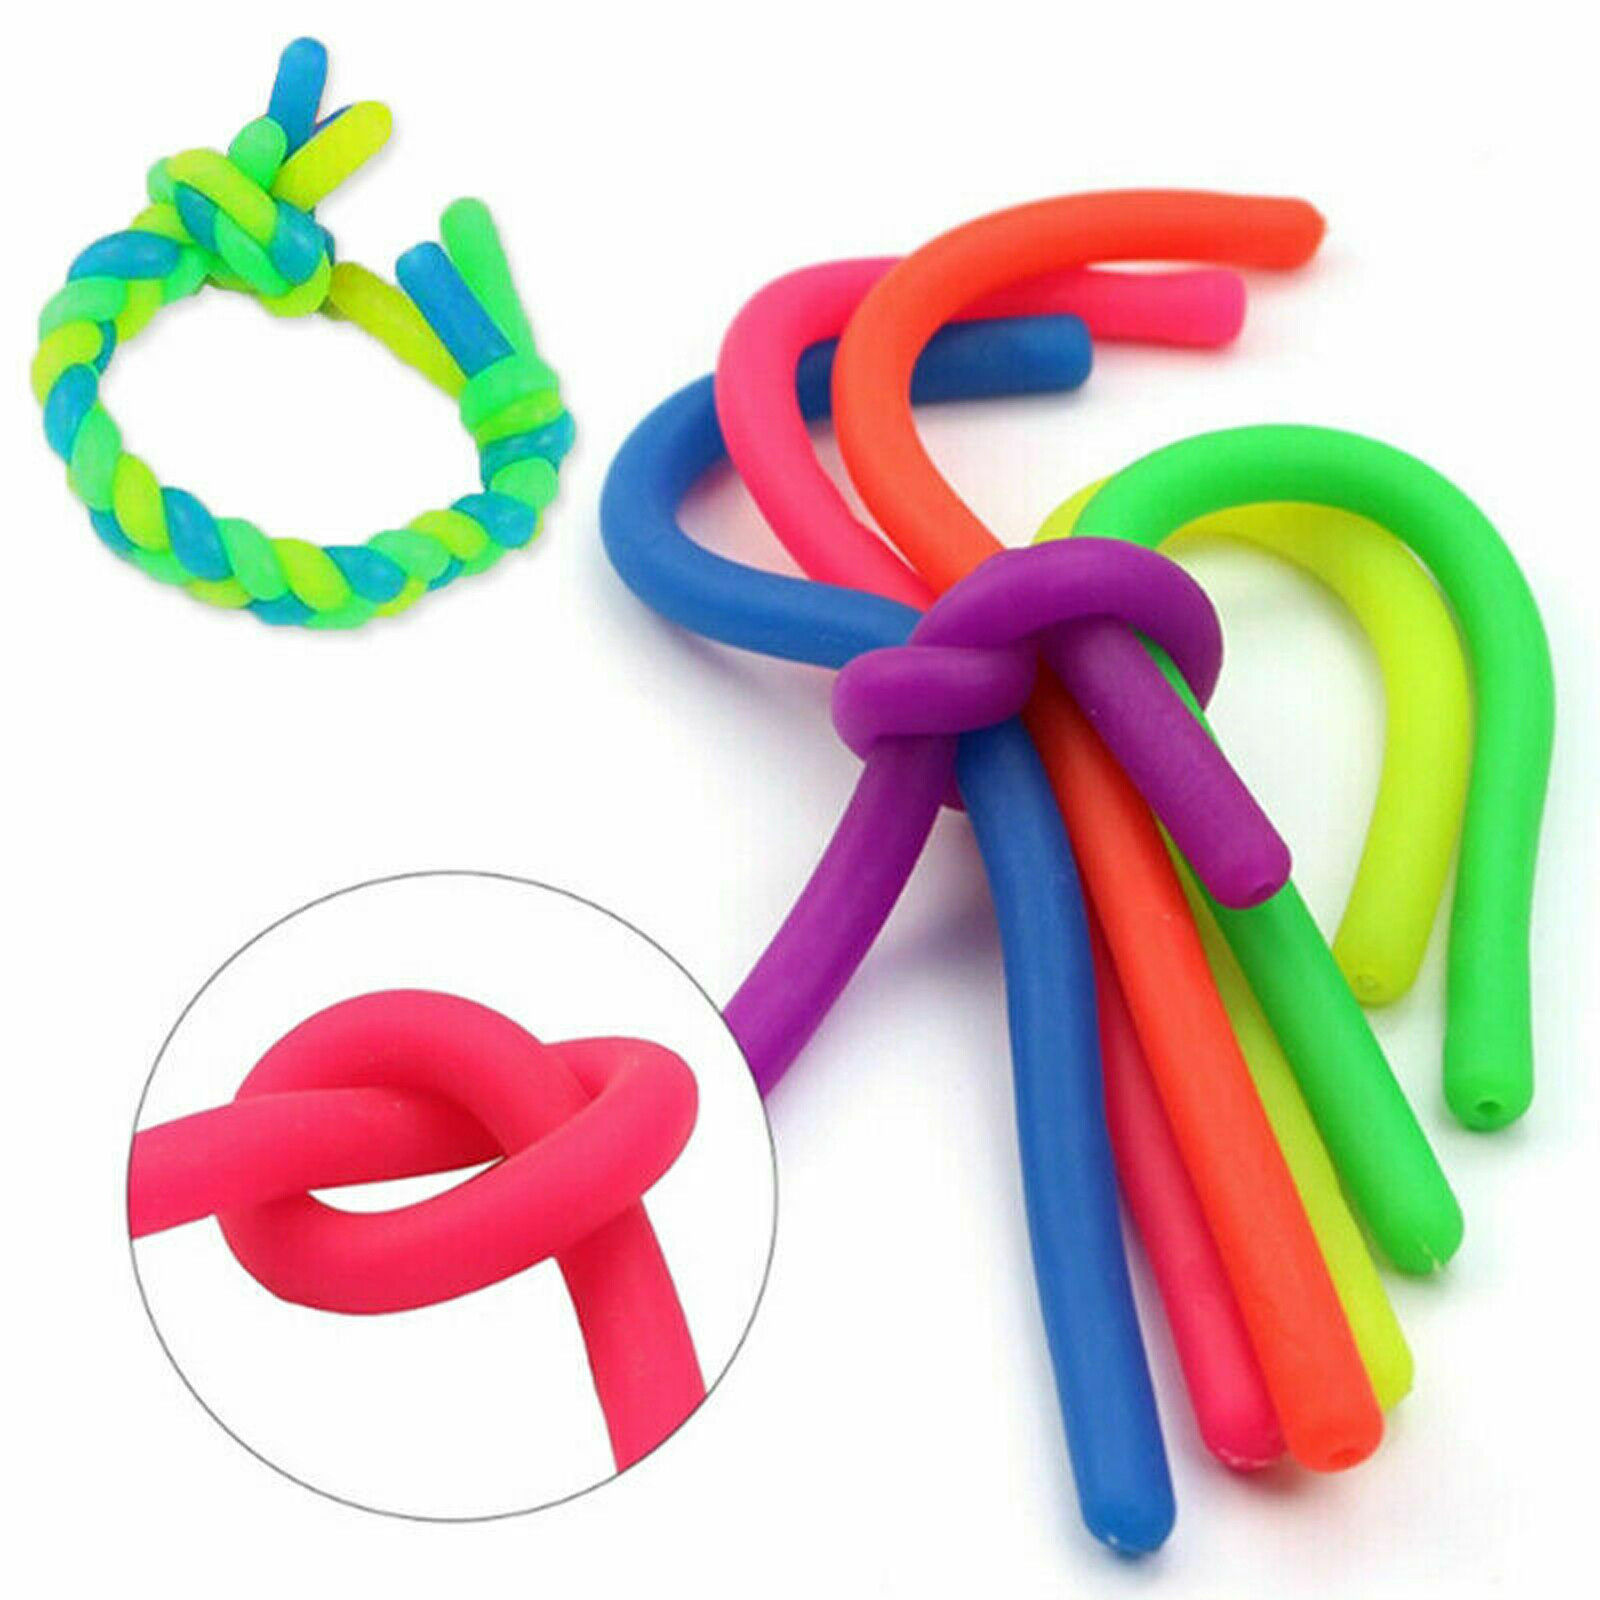 6x Kids Children Stretchy Noodle Toy String Neon Kids Children Fidget Stress Relief Sensory Toy